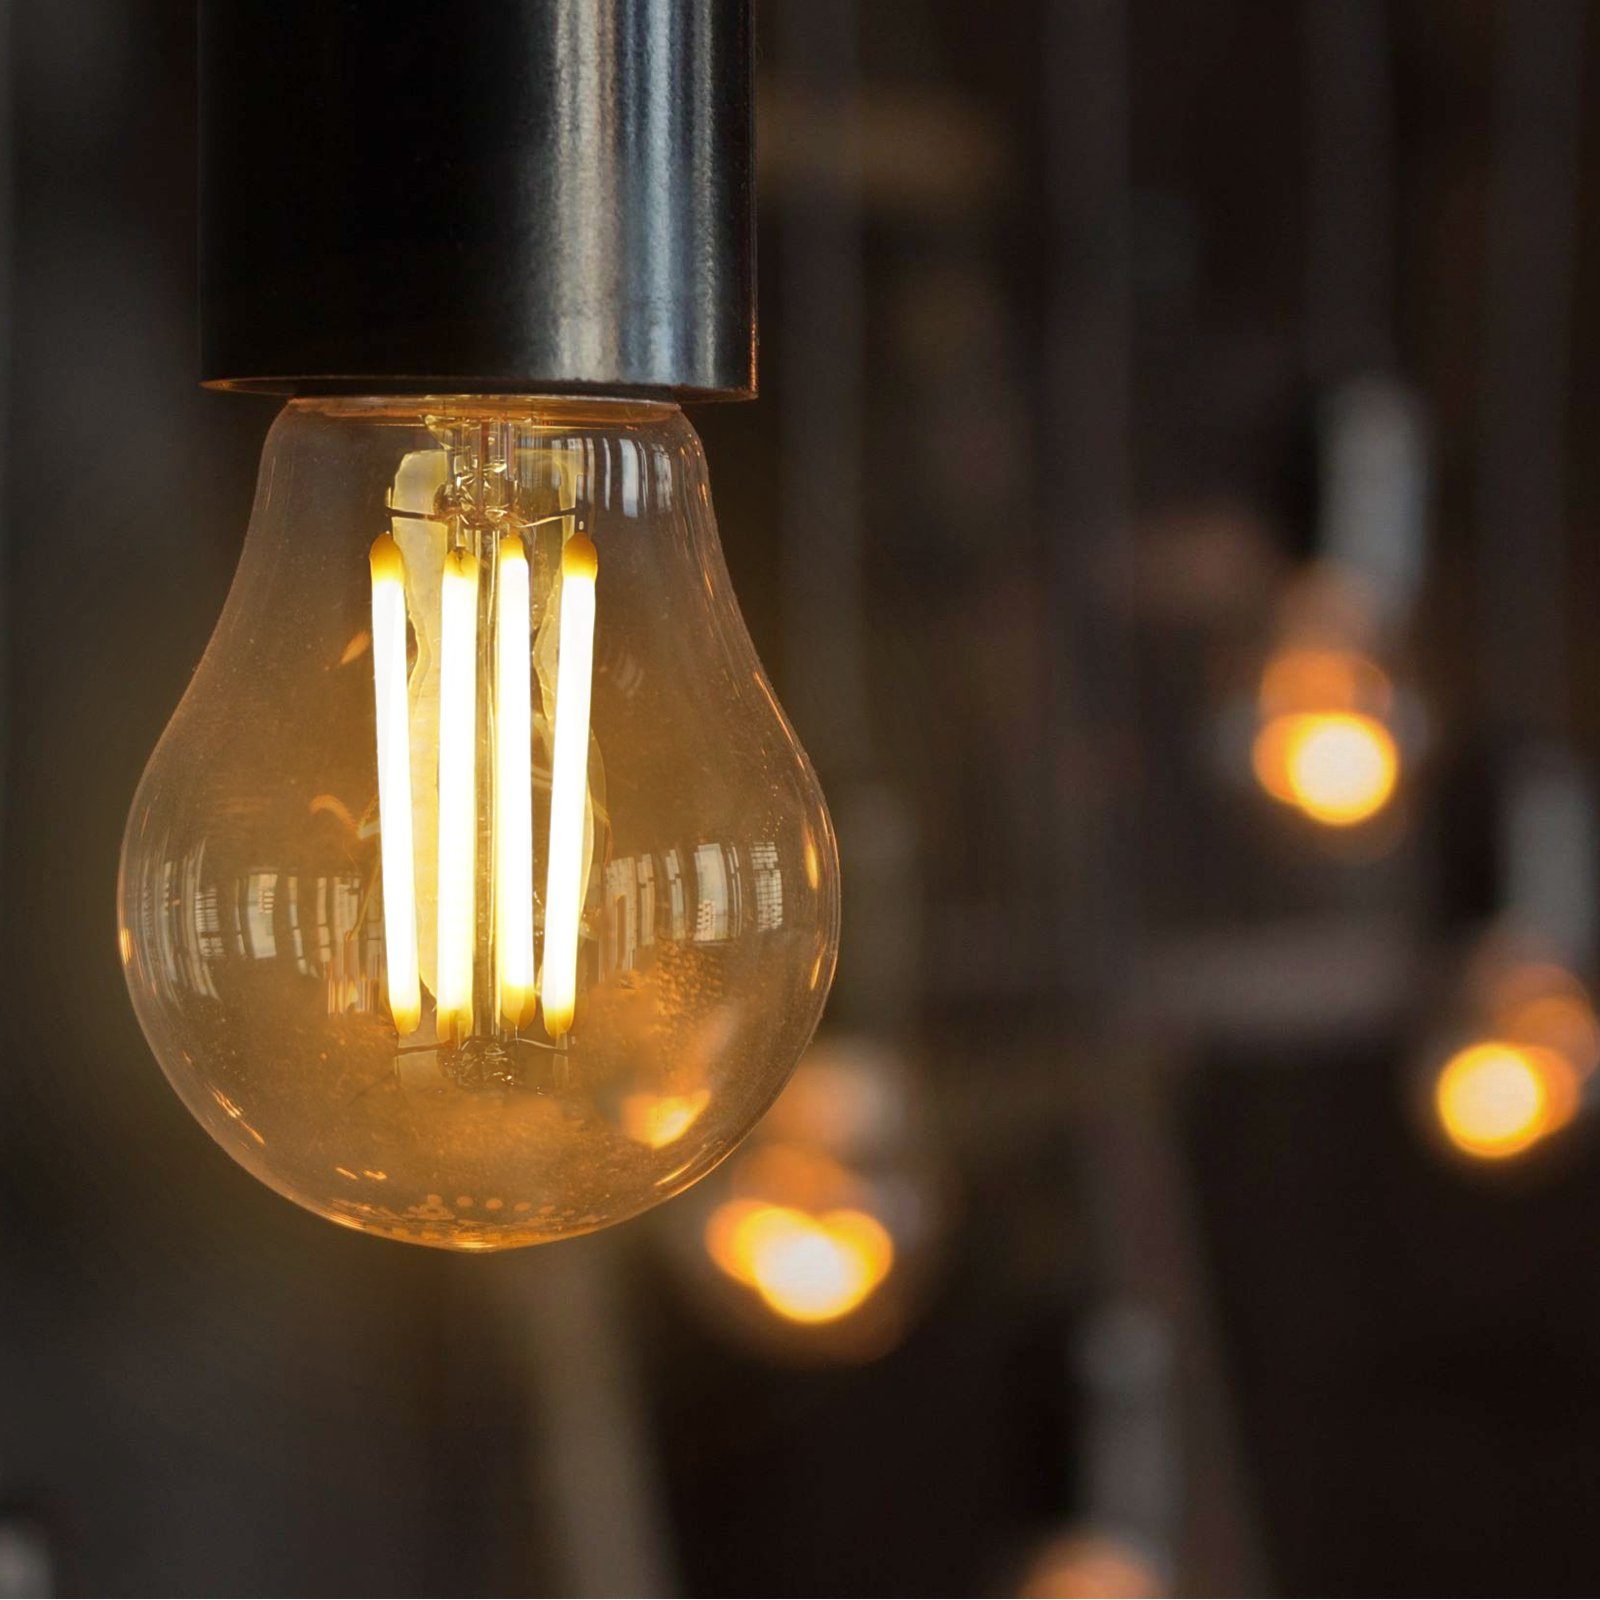 Edison - 2700K LED-Leuchtmittel E14//E27, E27, warmweiß, Energiesparlampe Vintage Retro Glühbirne 6 St., ZMH Glas G45 Filament Birne LED